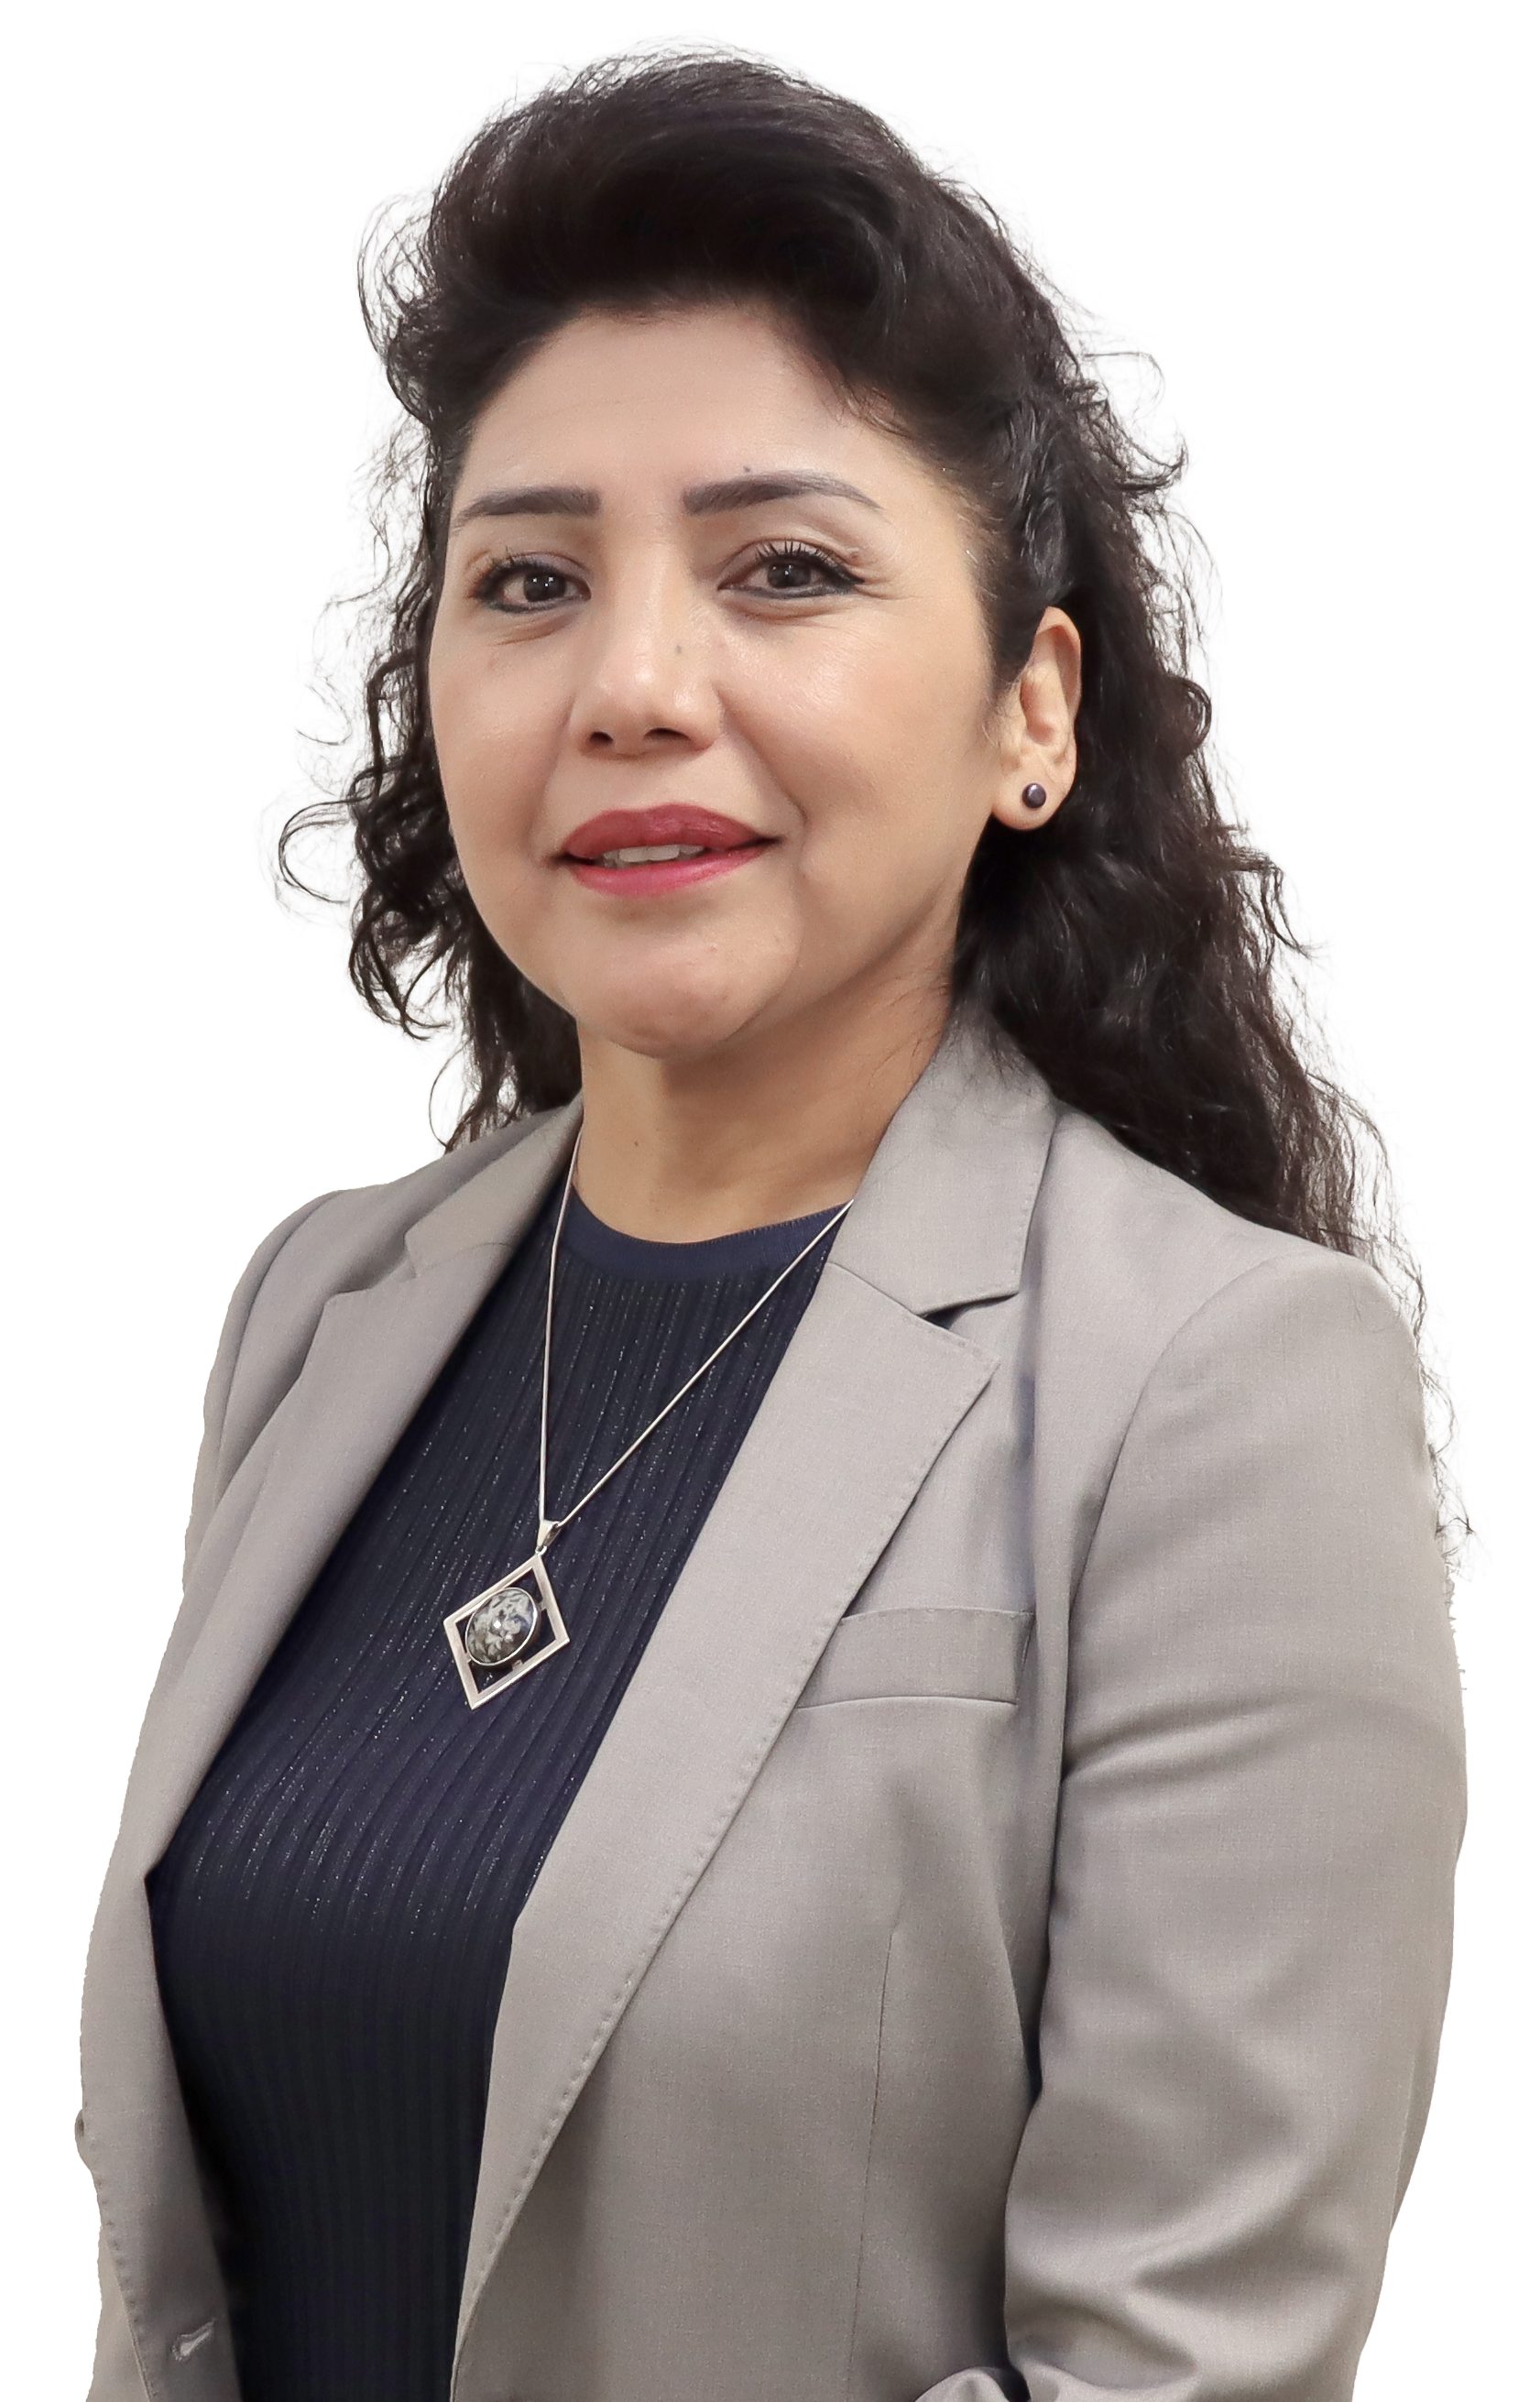 Dr. Julieta Consuelo Joaniquina Hidalgo